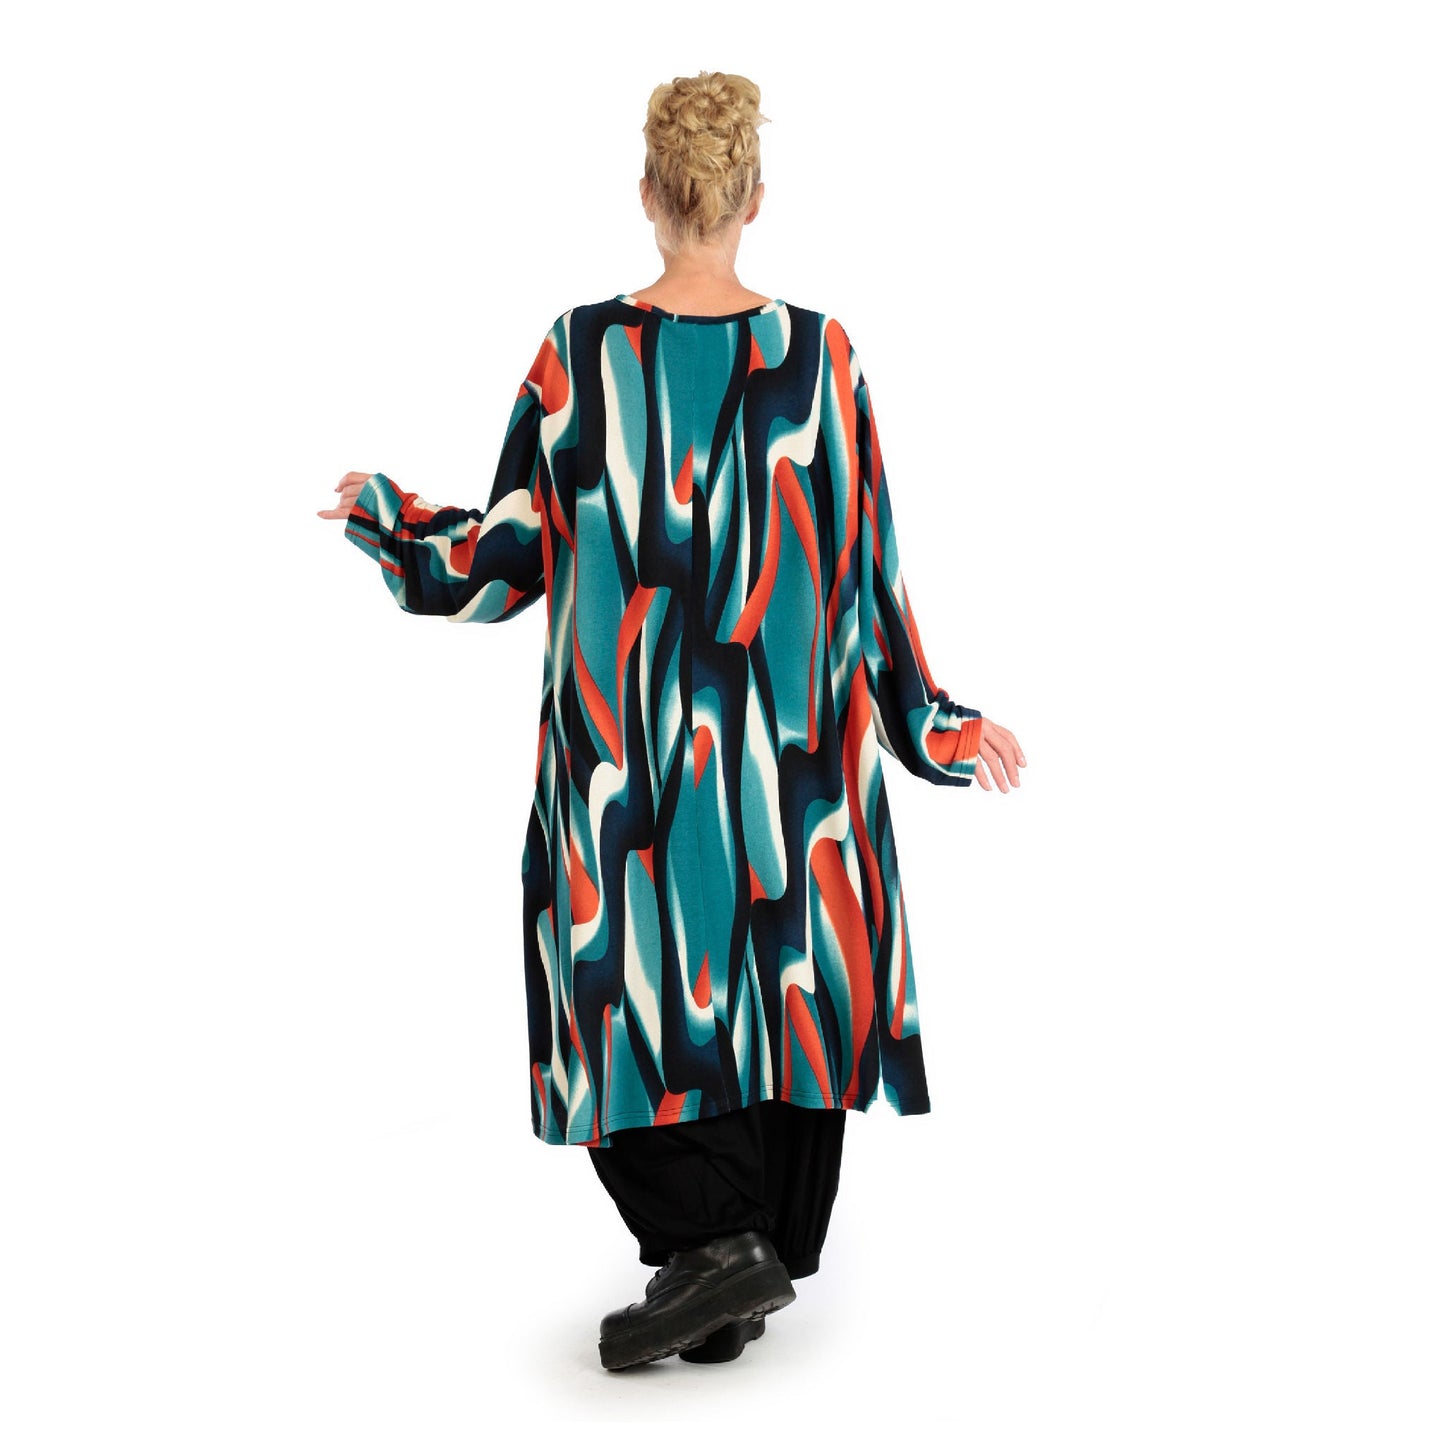 Winter dress in A-shape made of soft fine knit quality, Aurora in blue-orange-black